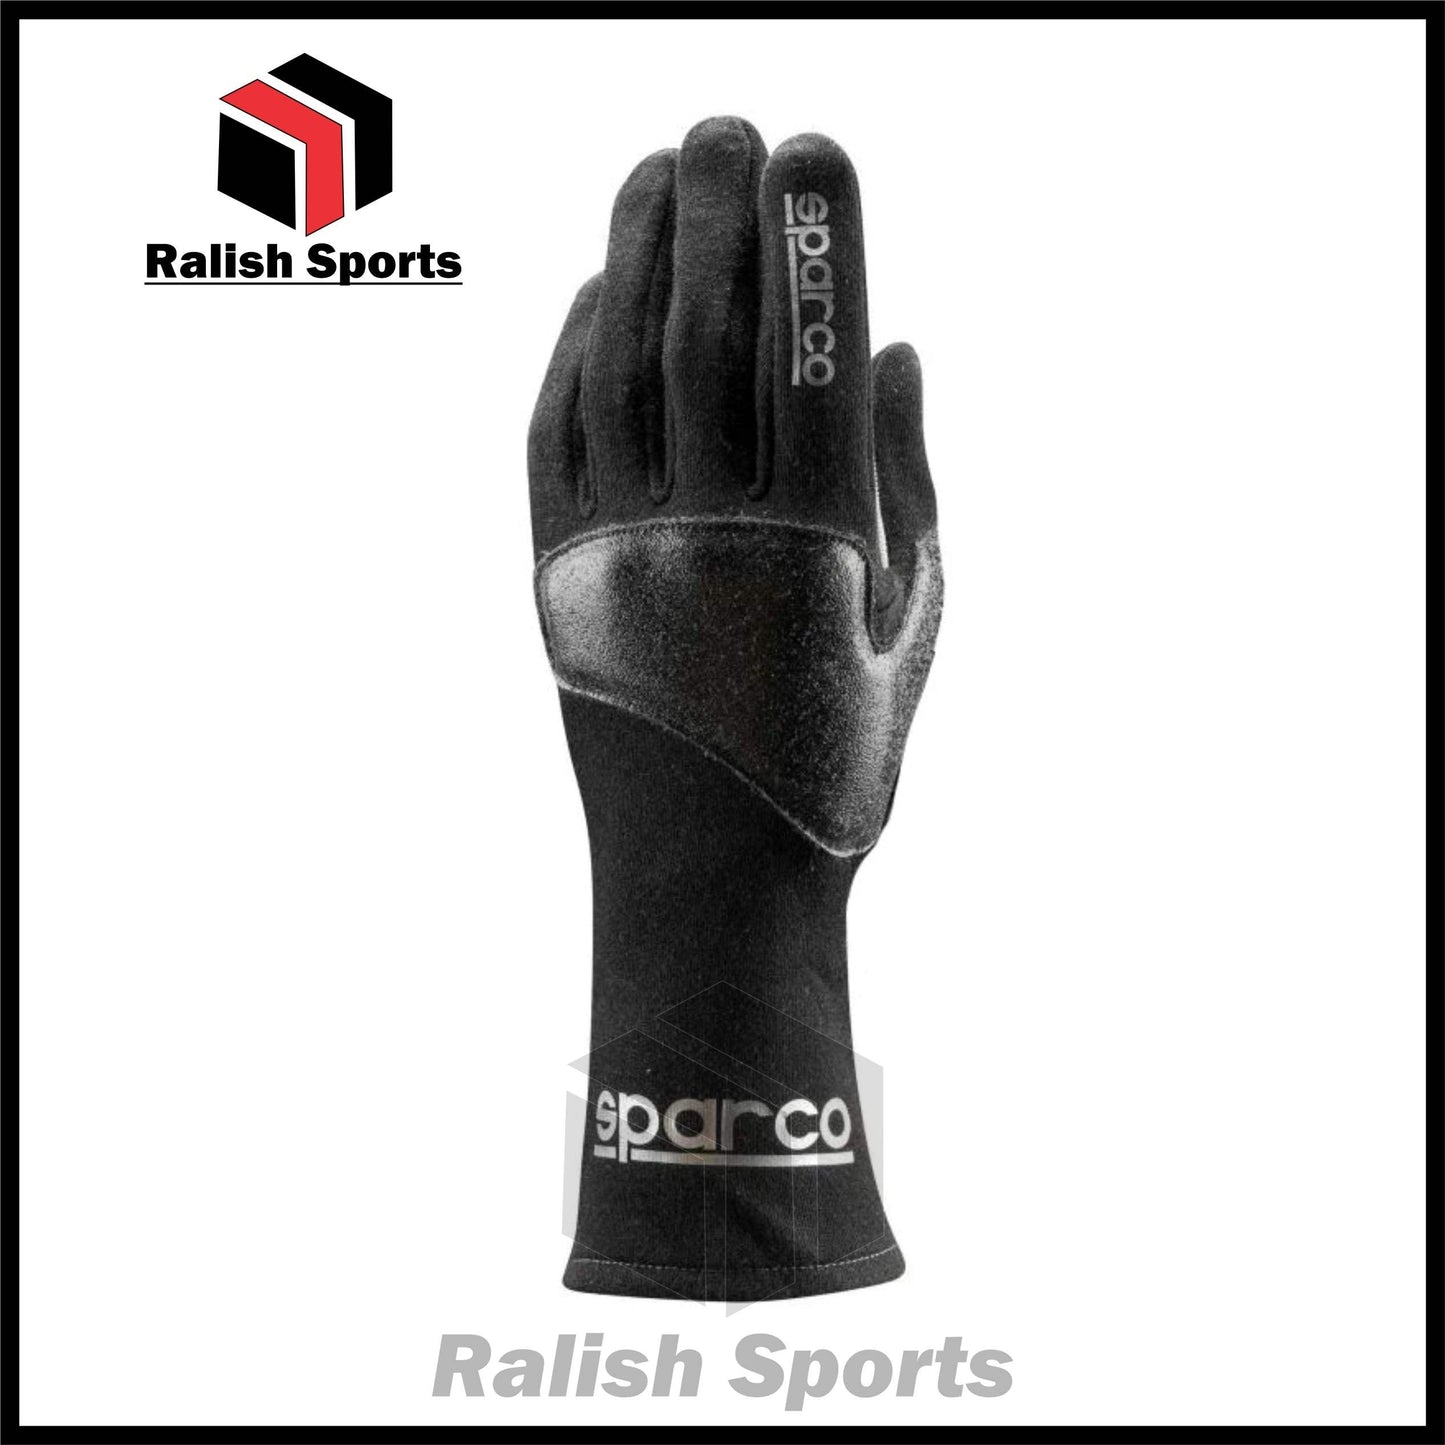 Sparco Go Kart Gloves - Ralish Sports